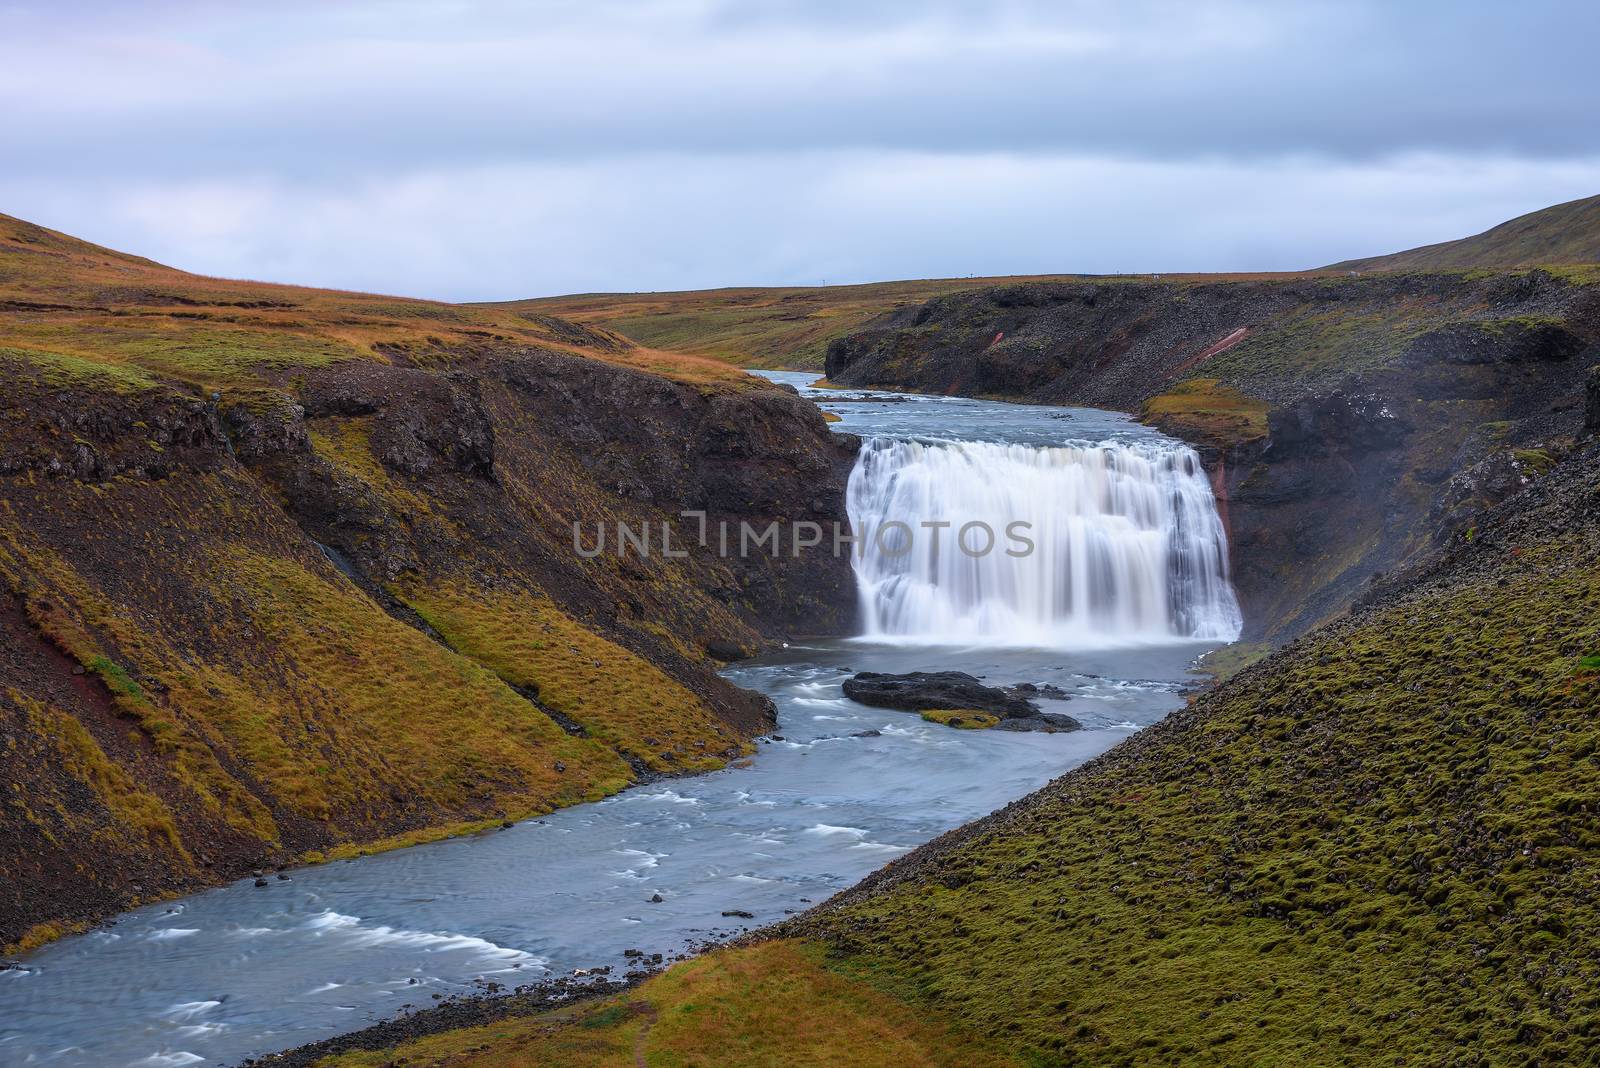 Thorufoss waterfall located on the Laxa i Kjos river near Reykjavik in Iceland by nickfox